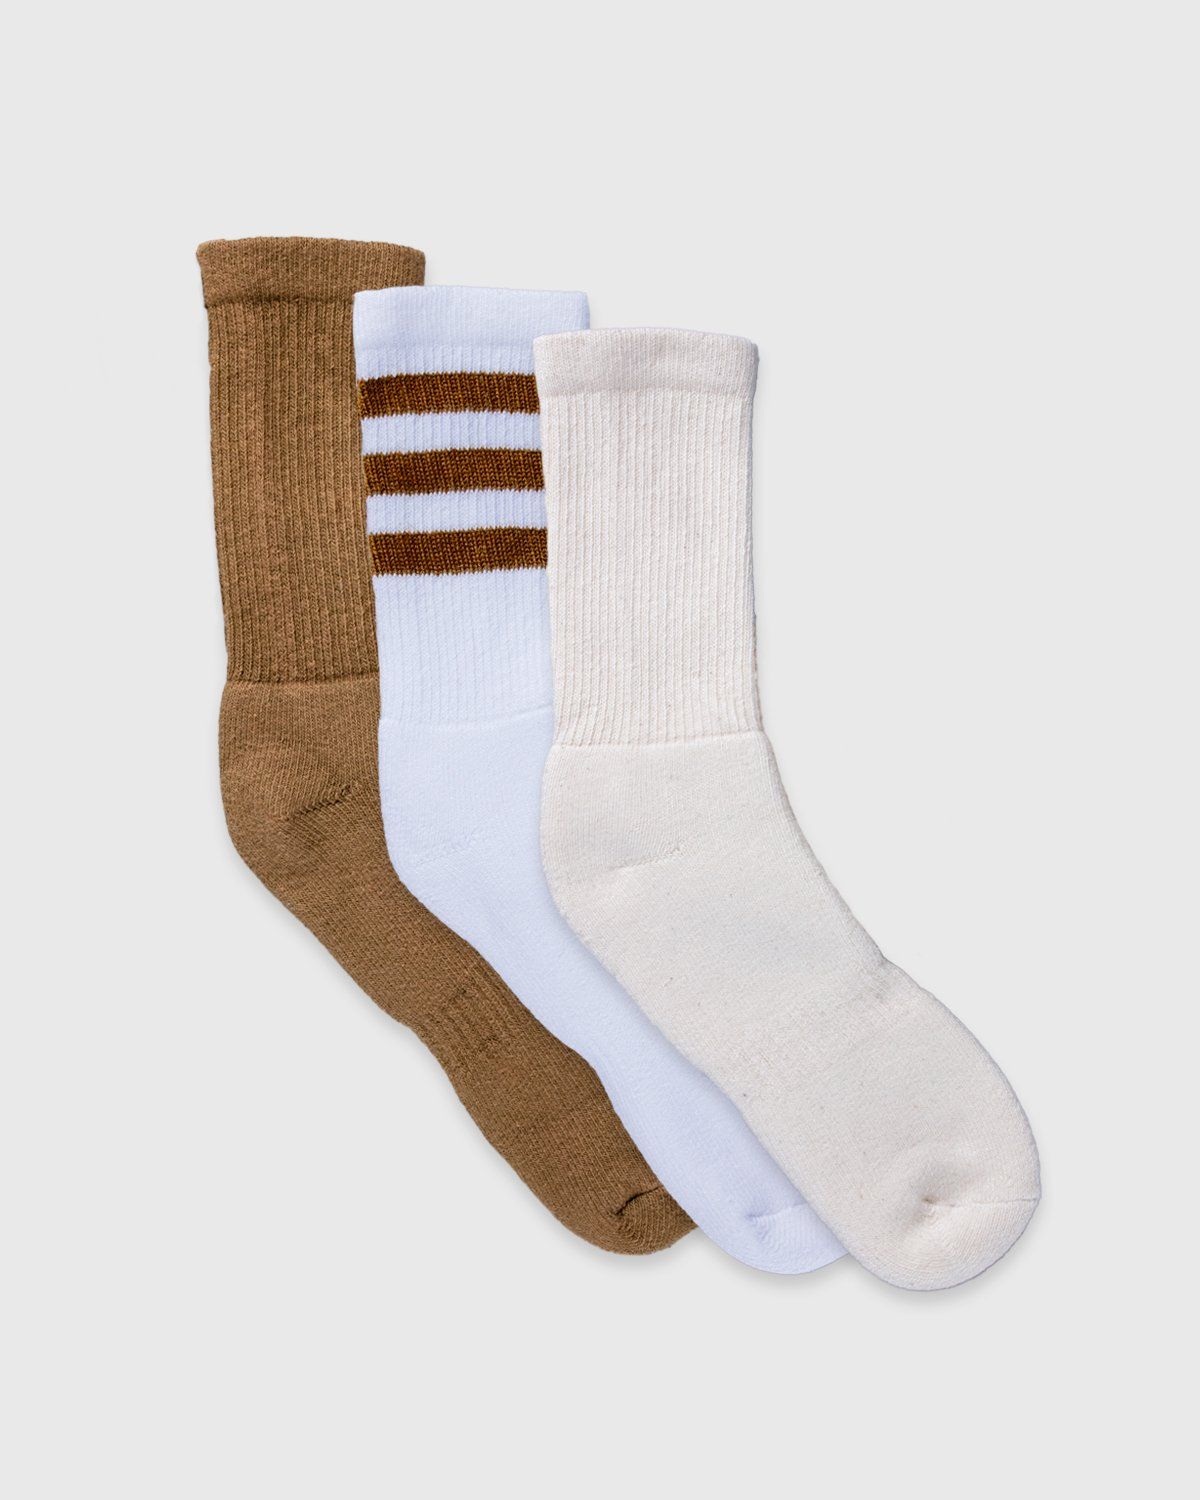 Darryl Brown – Sock Set Multicolour - Crew - Multi - Image 1